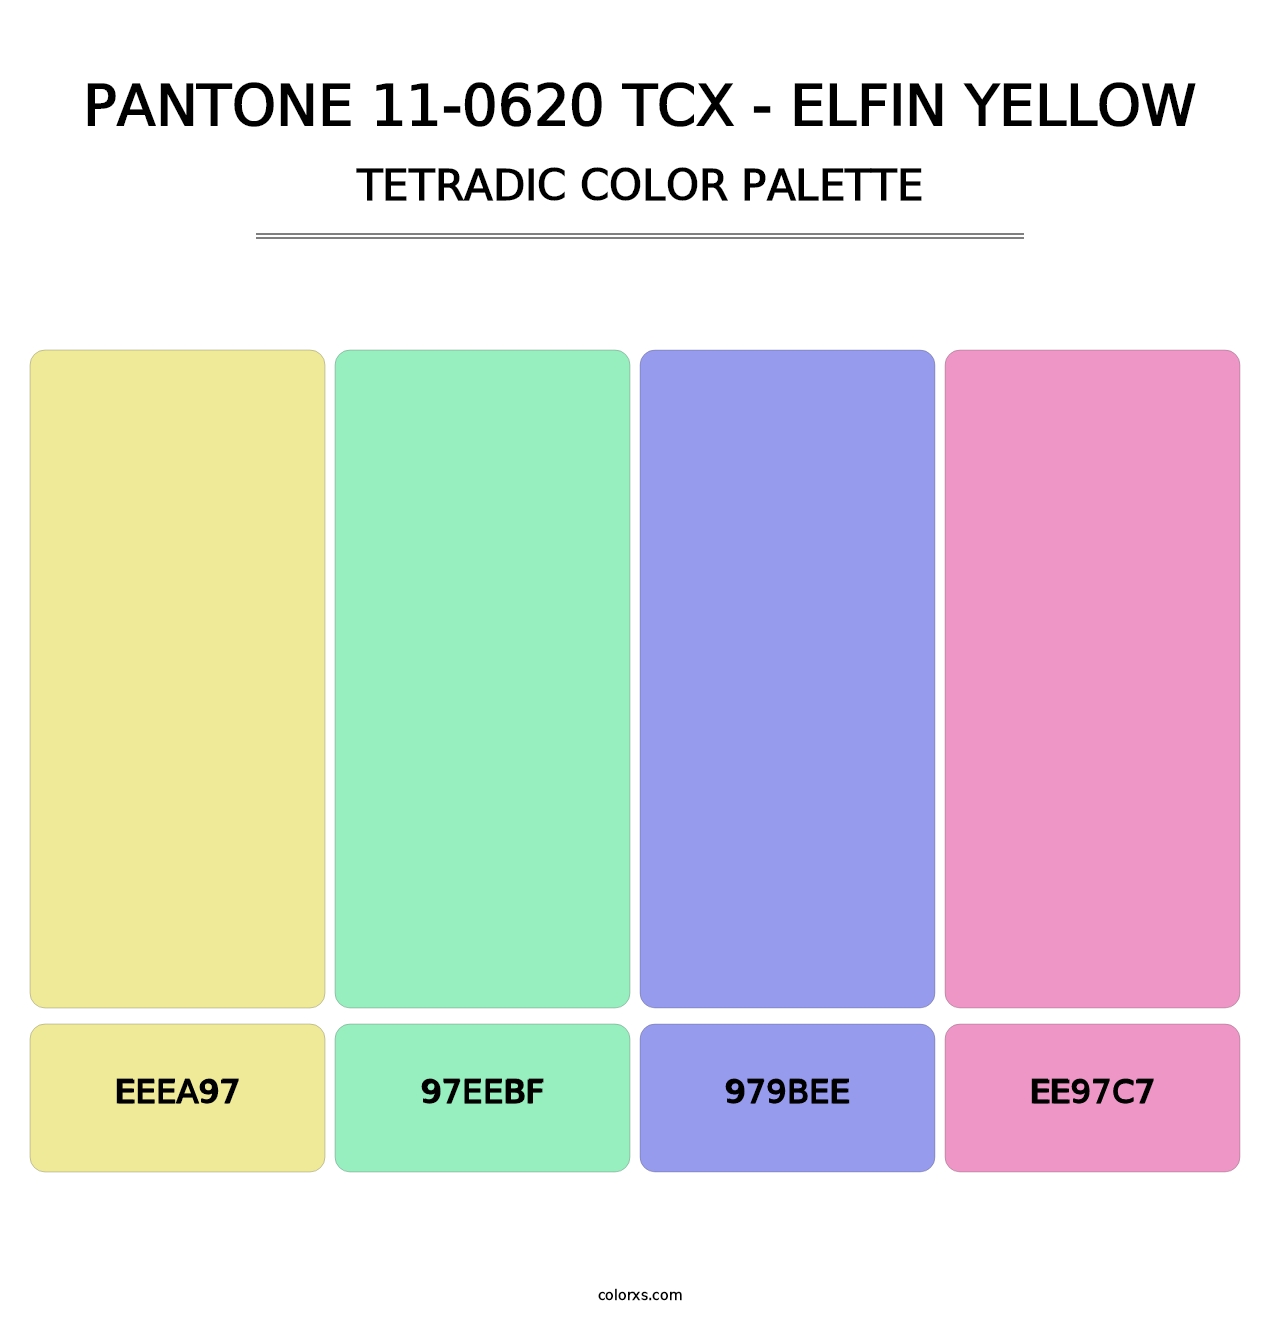 PANTONE 11-0620 TCX - Elfin Yellow - Tetradic Color Palette